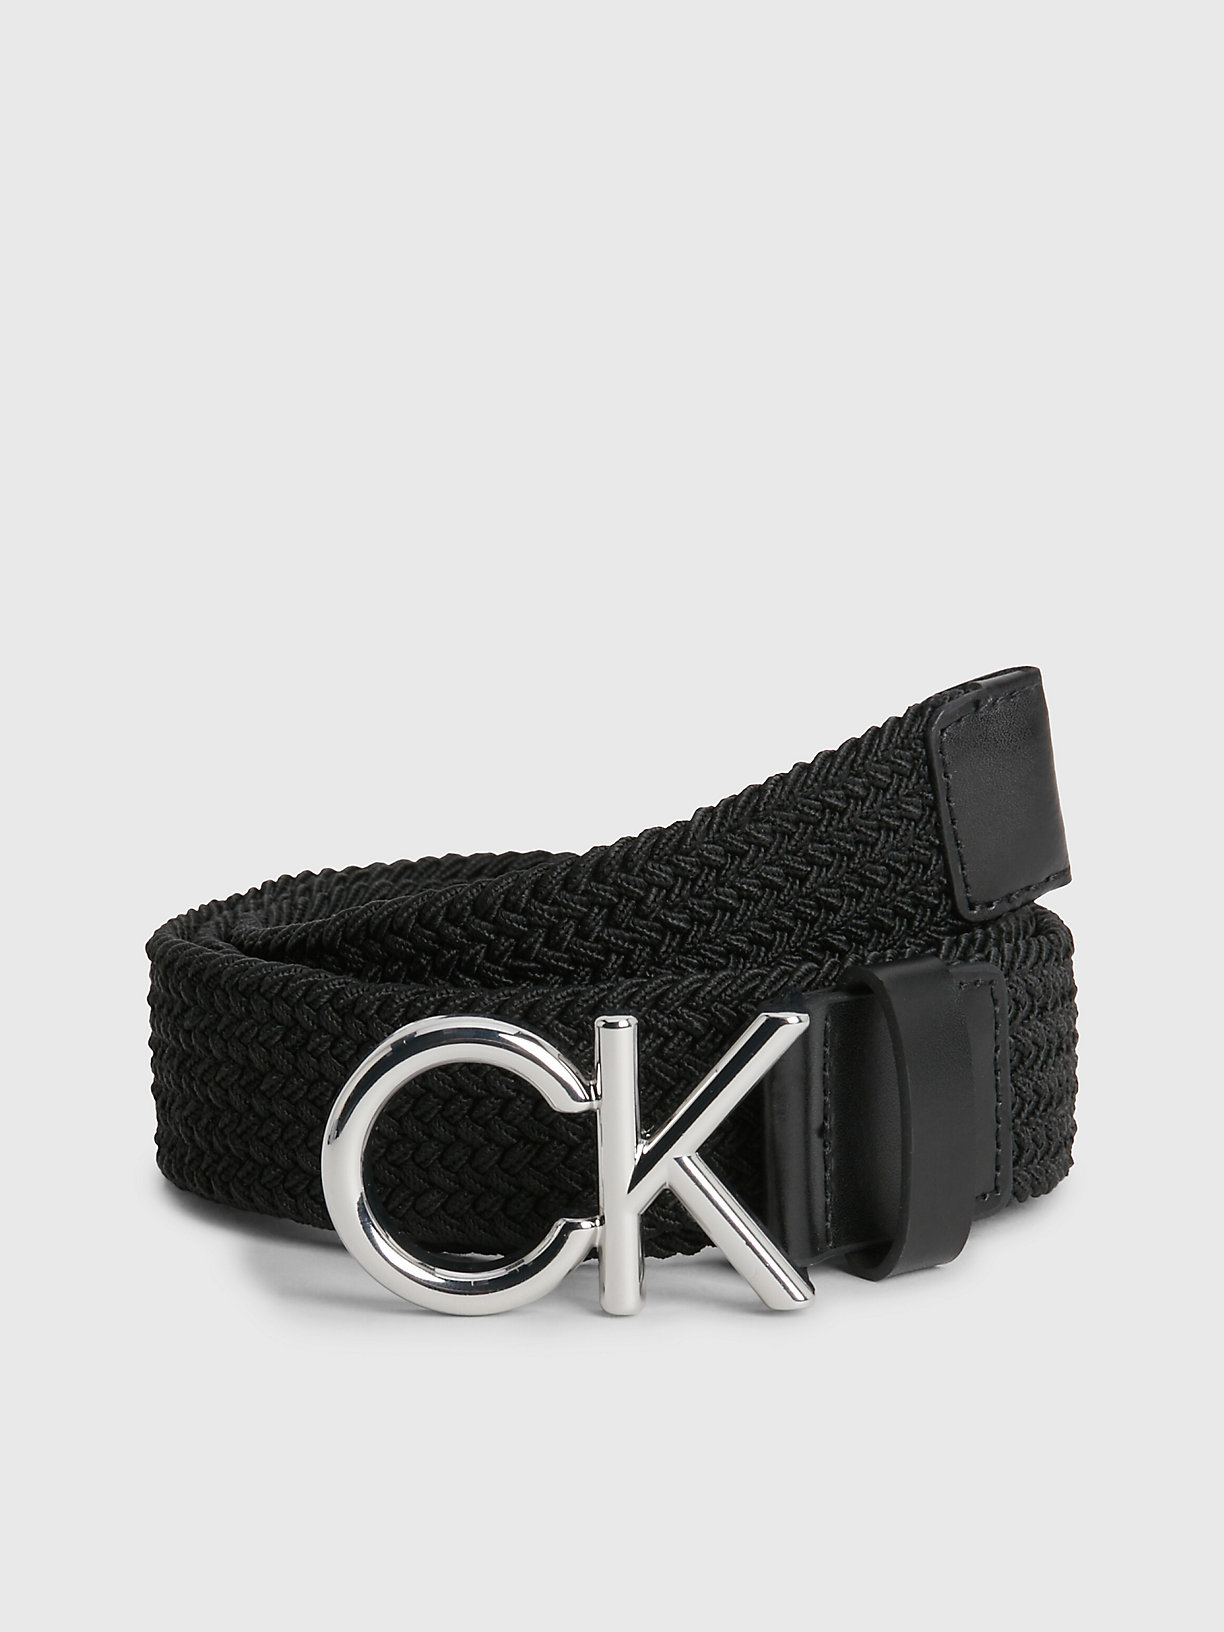 CK BLACK Cinturón trenzado de hombre CALVIN KLEIN